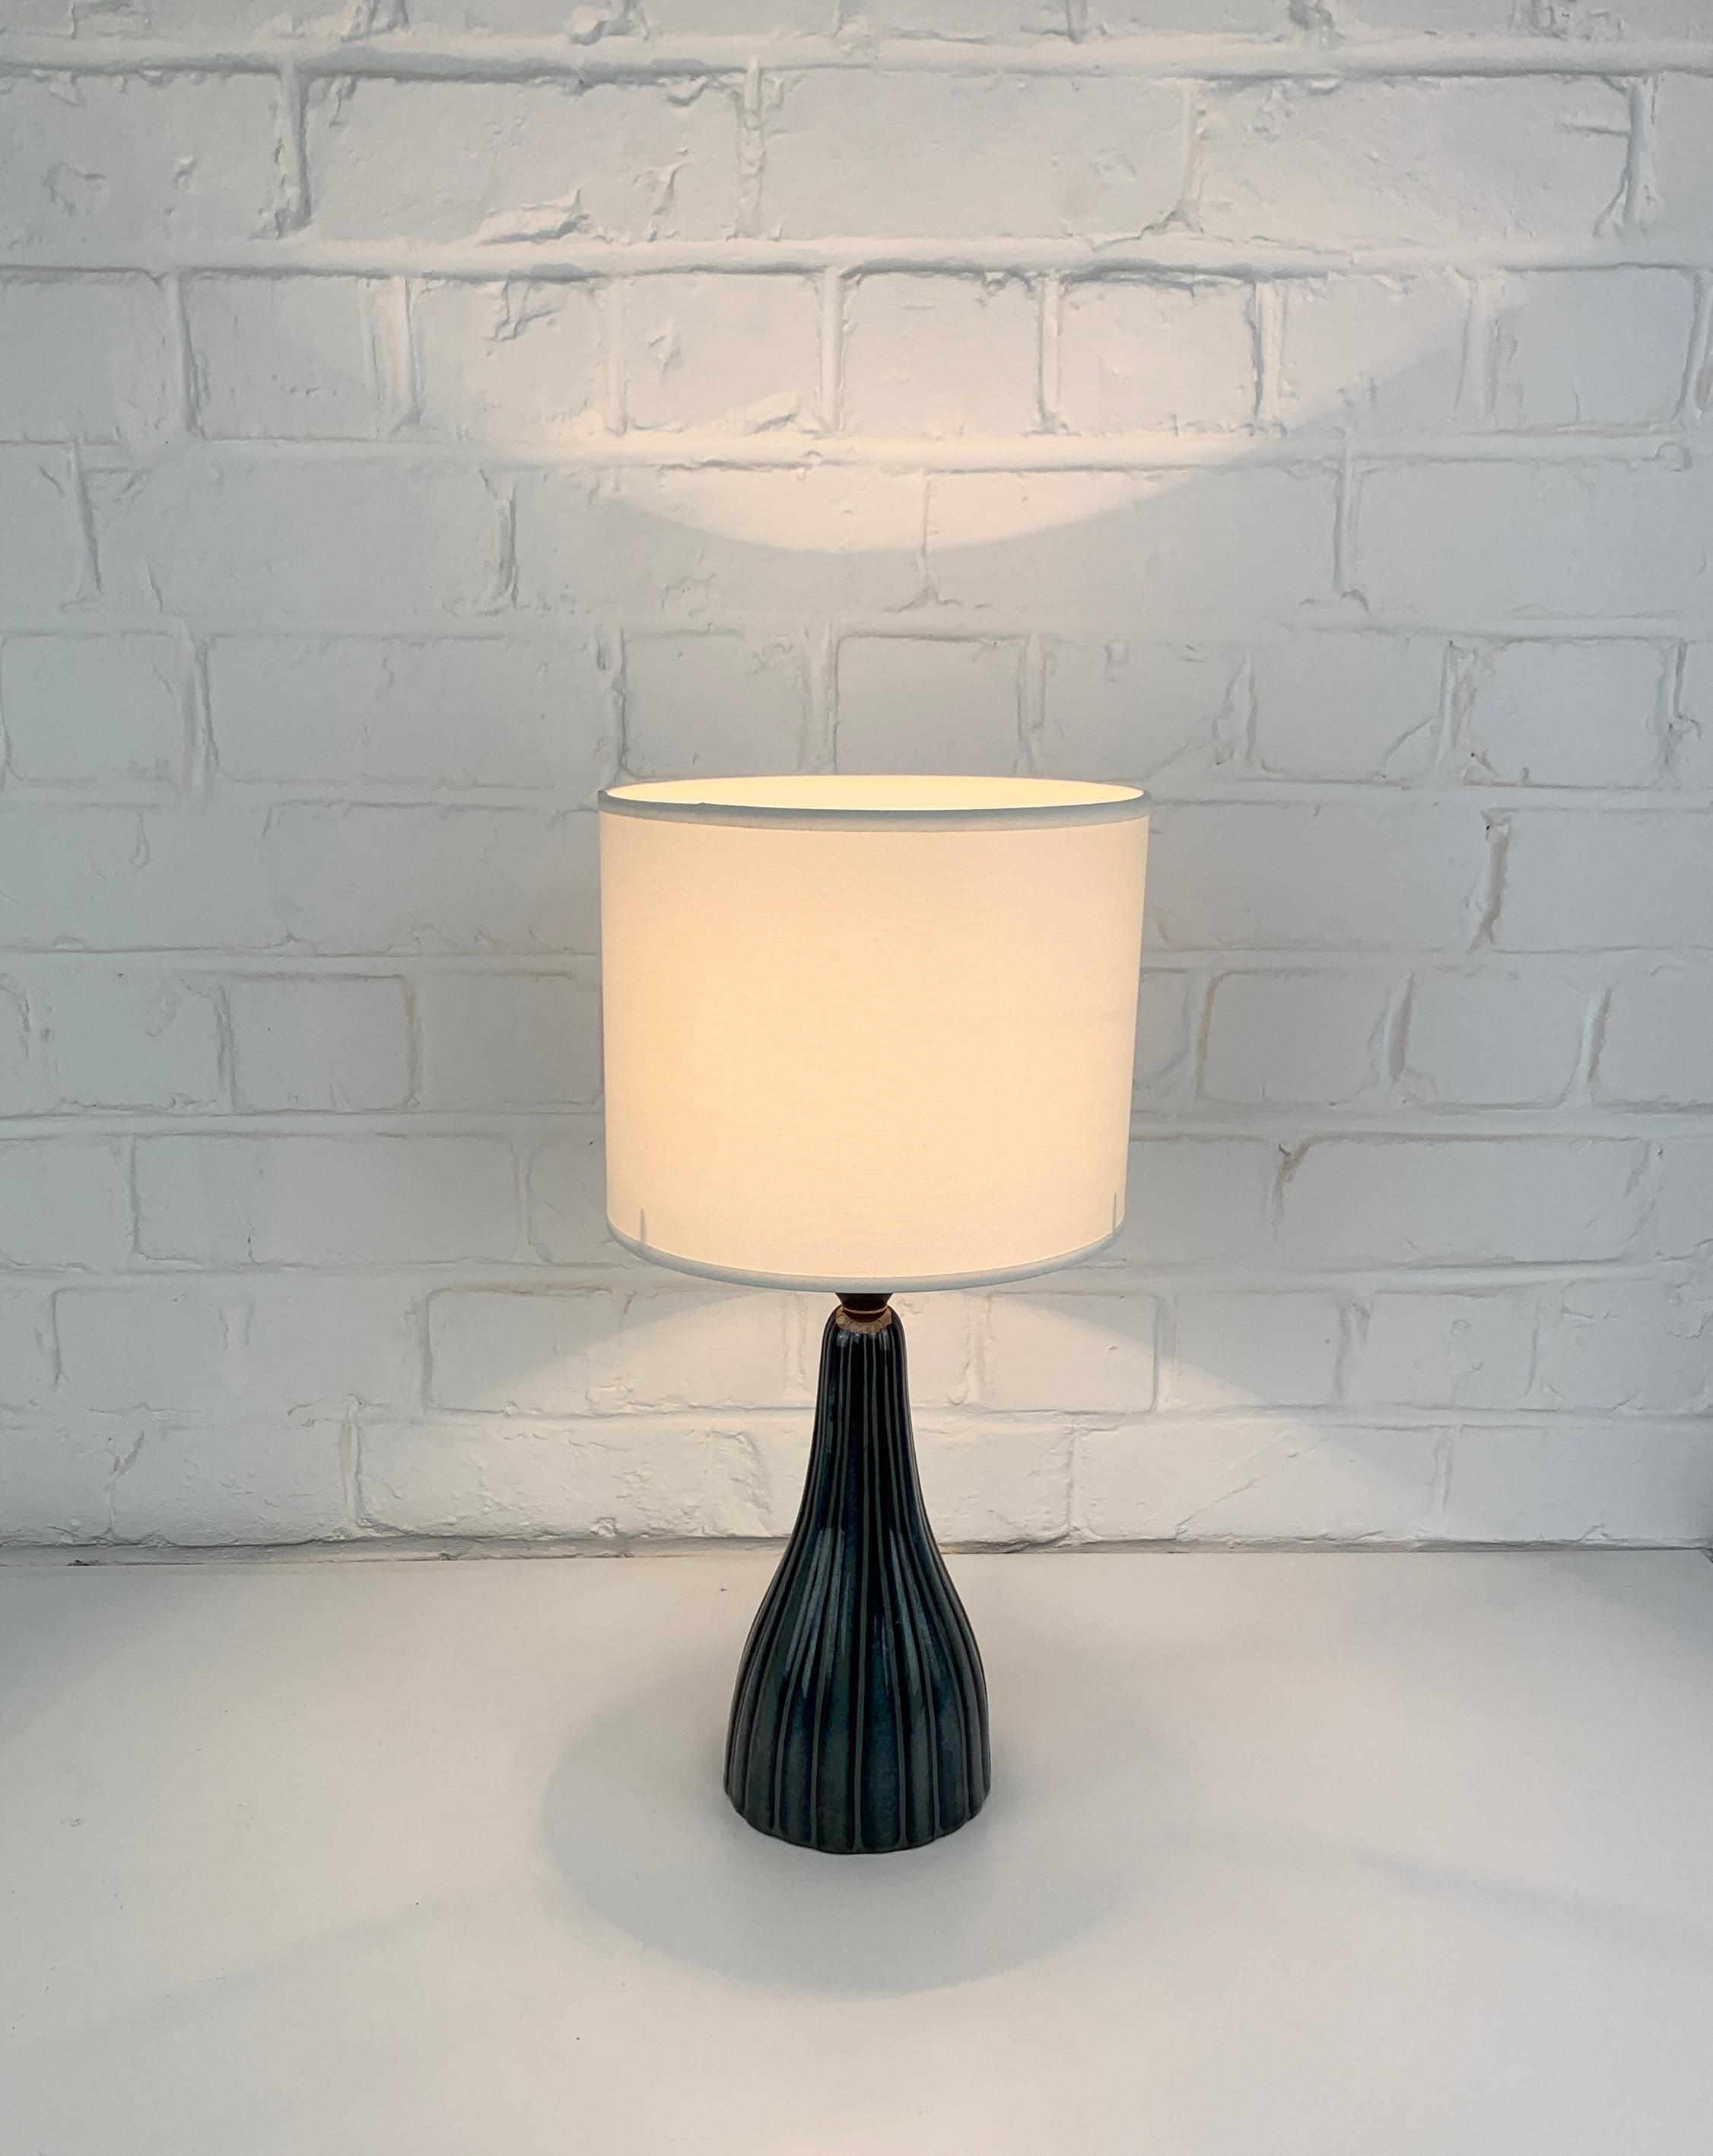 Glazed Danish Søholm Stentøj ceramic table lamp blue stripe pattern Mid-Century Modern For Sale